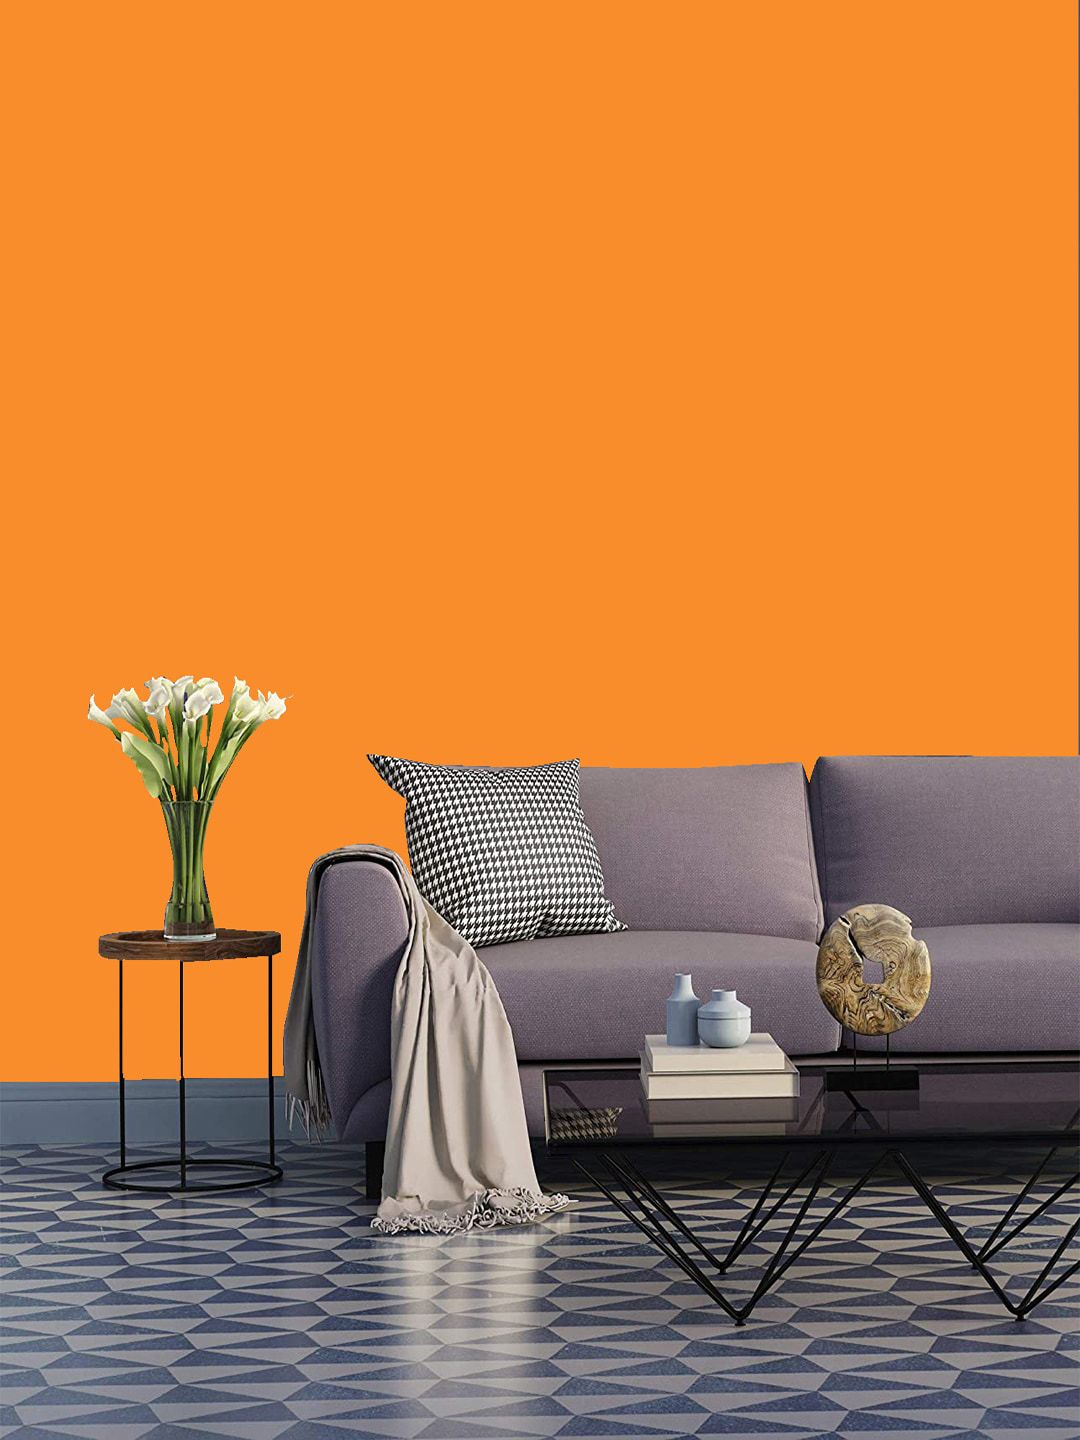 Jaamso Royals Orange Solid Wallpaper Price in India